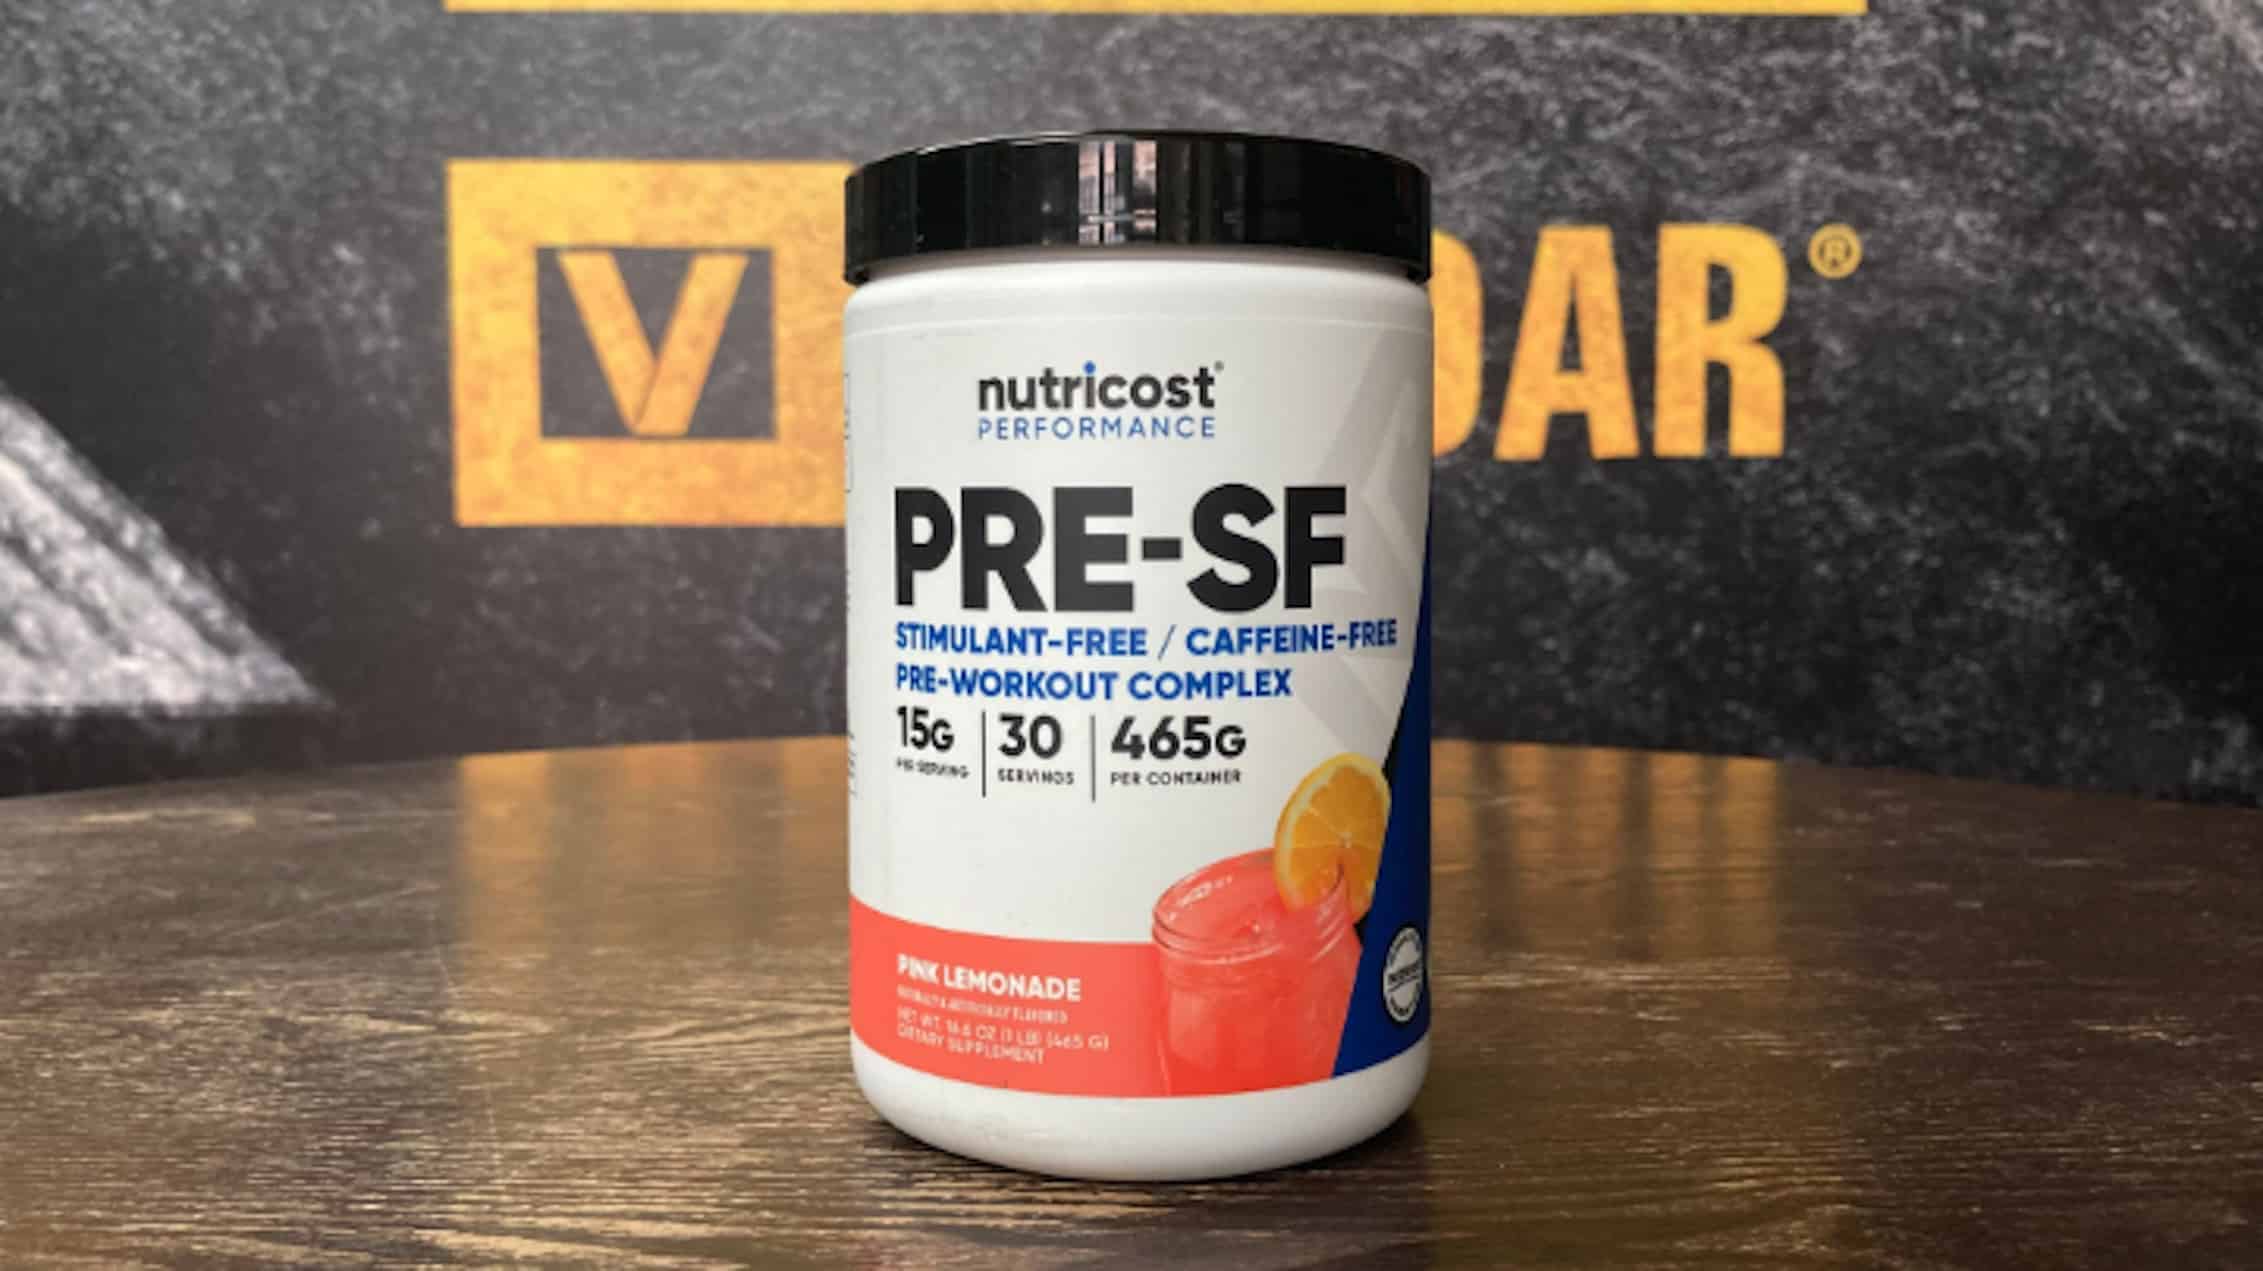 Nutricost Stim-Free Pre-Workout